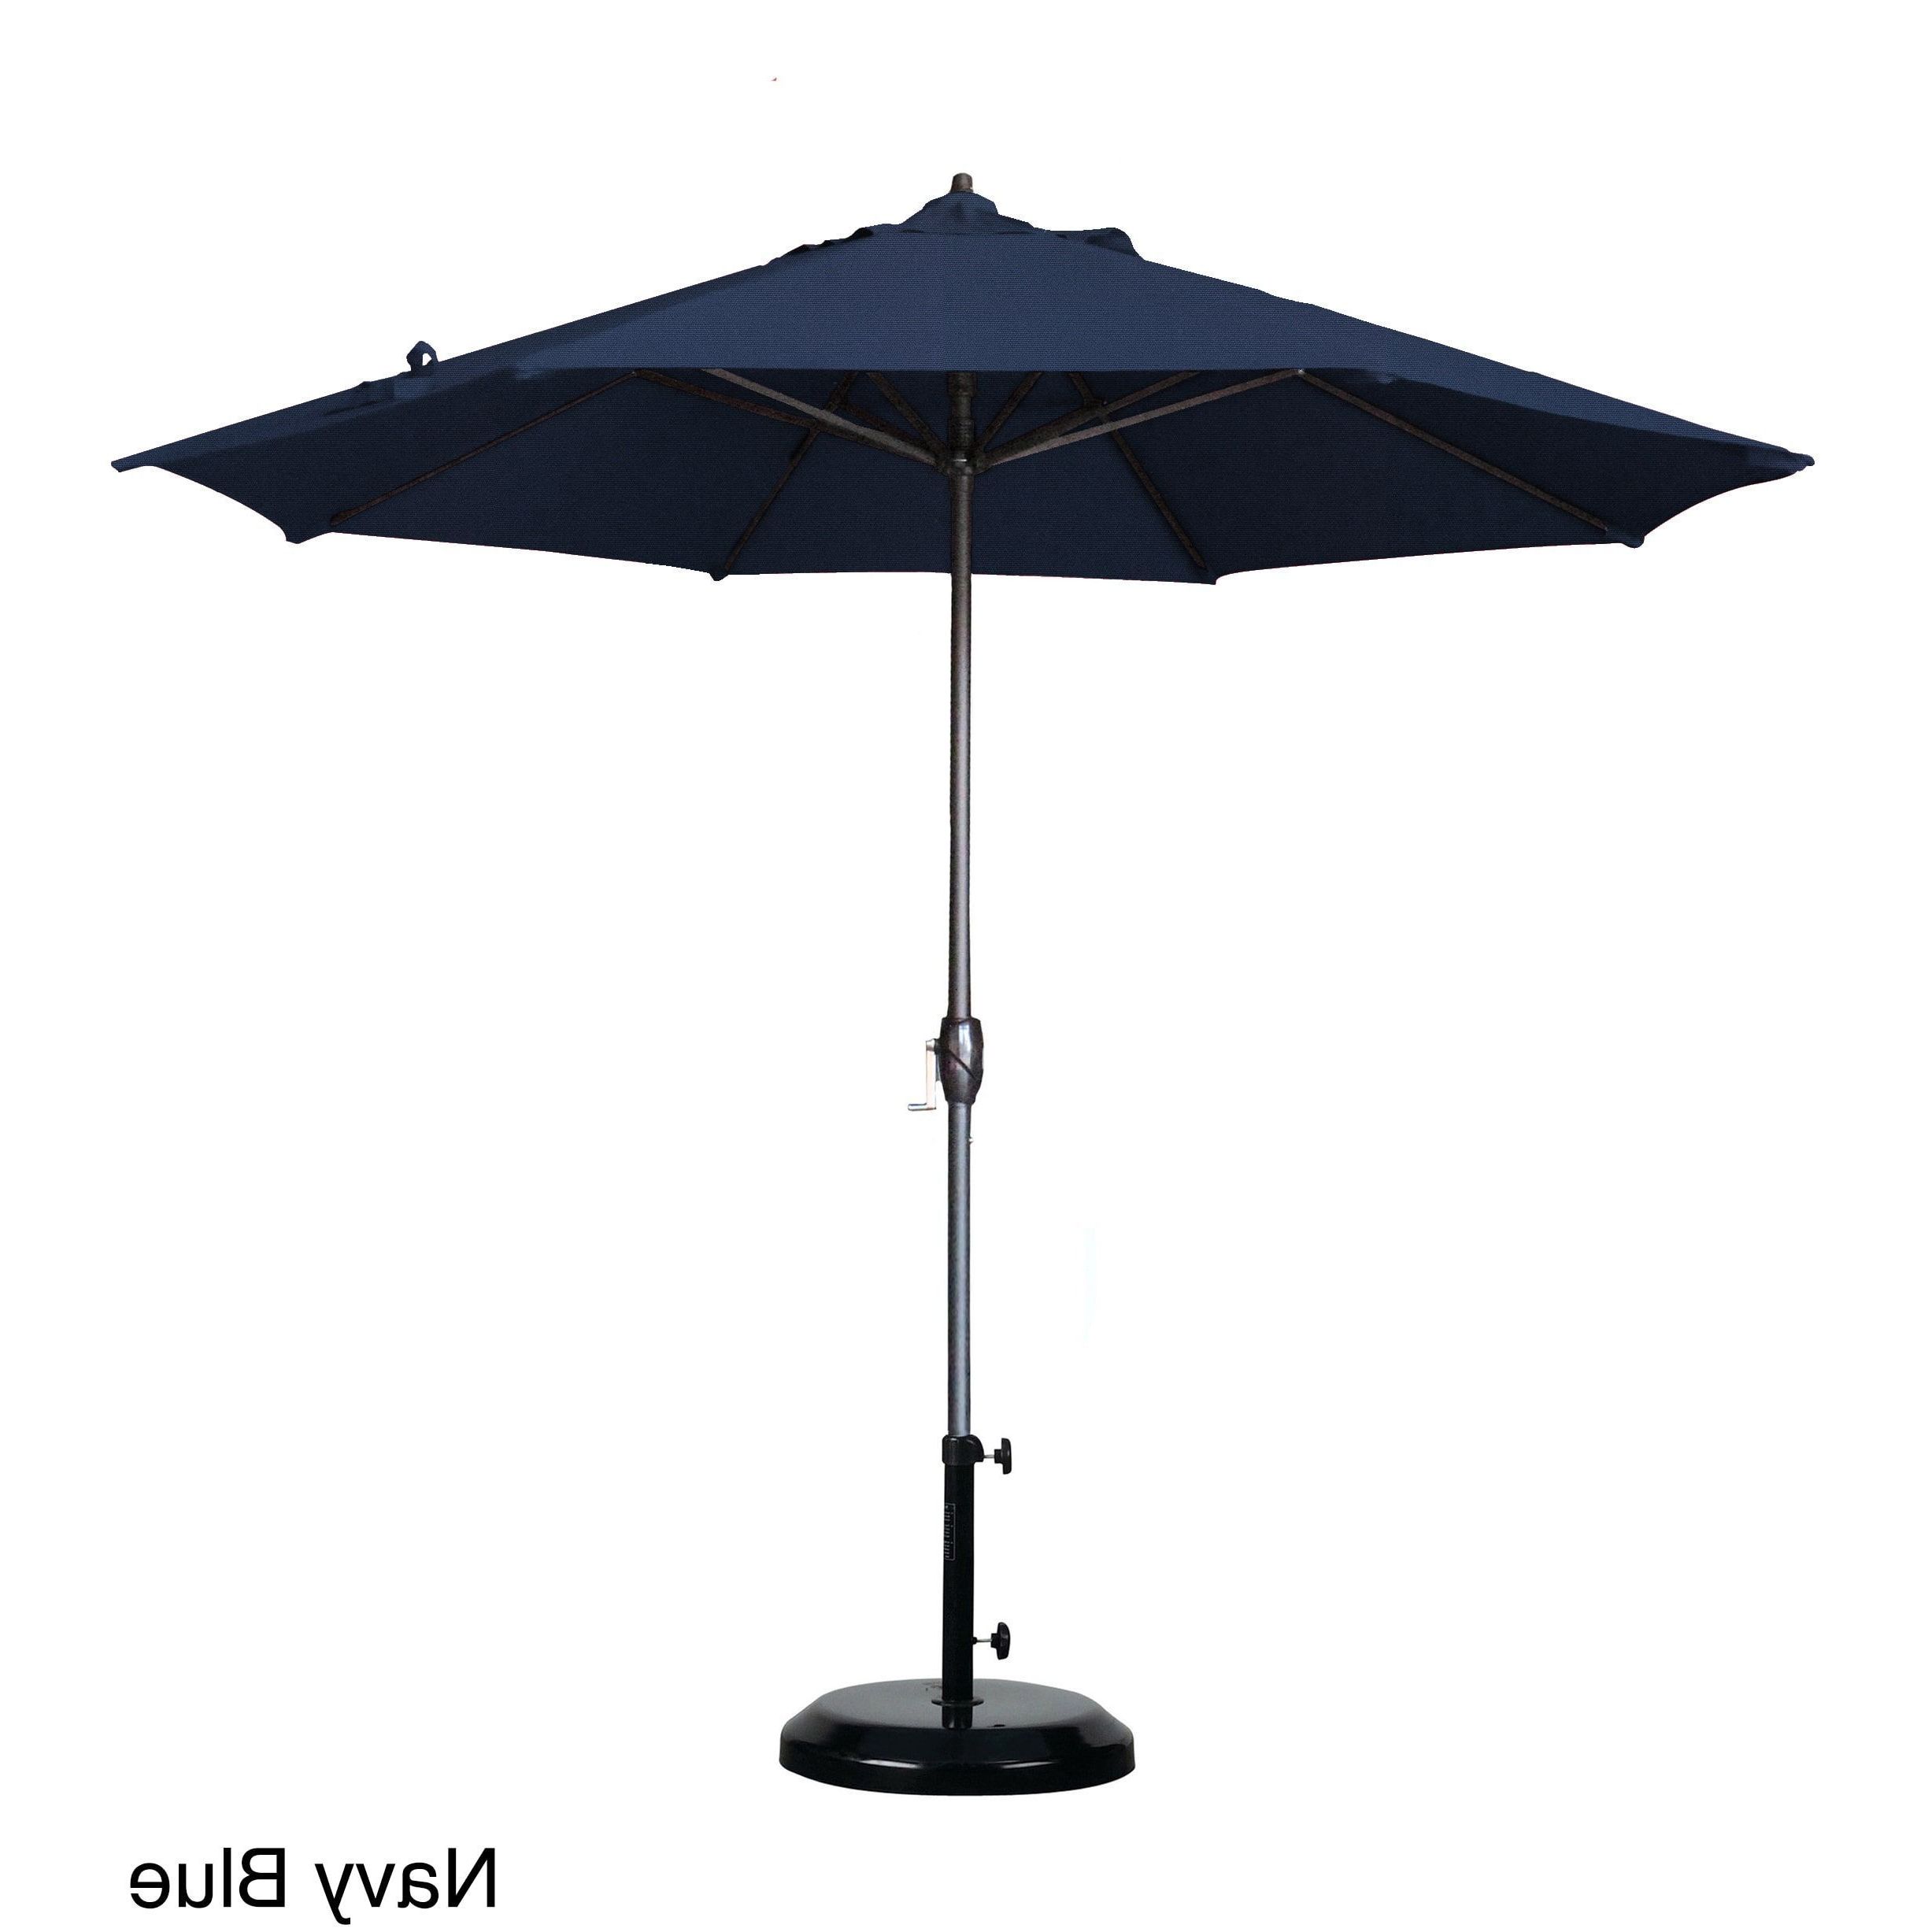 Wacker Market Umbrellas With Regard To Well Liked Oliver & James Giusti 9 Foot Crank Open Auto Tilt Round Umbrella (Photo 5 of 20)